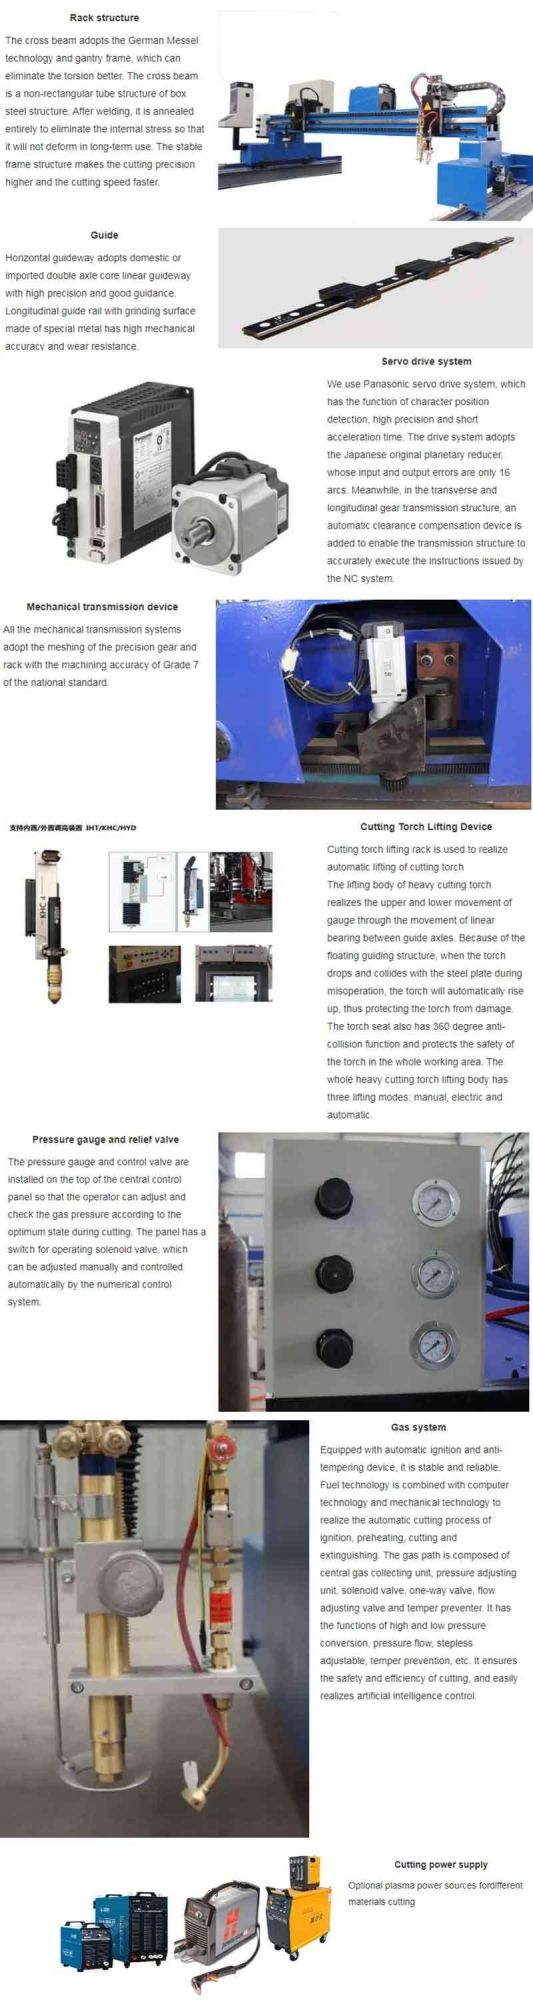 CNC Plasma Profile Cutter Plasma Cutting Product Line